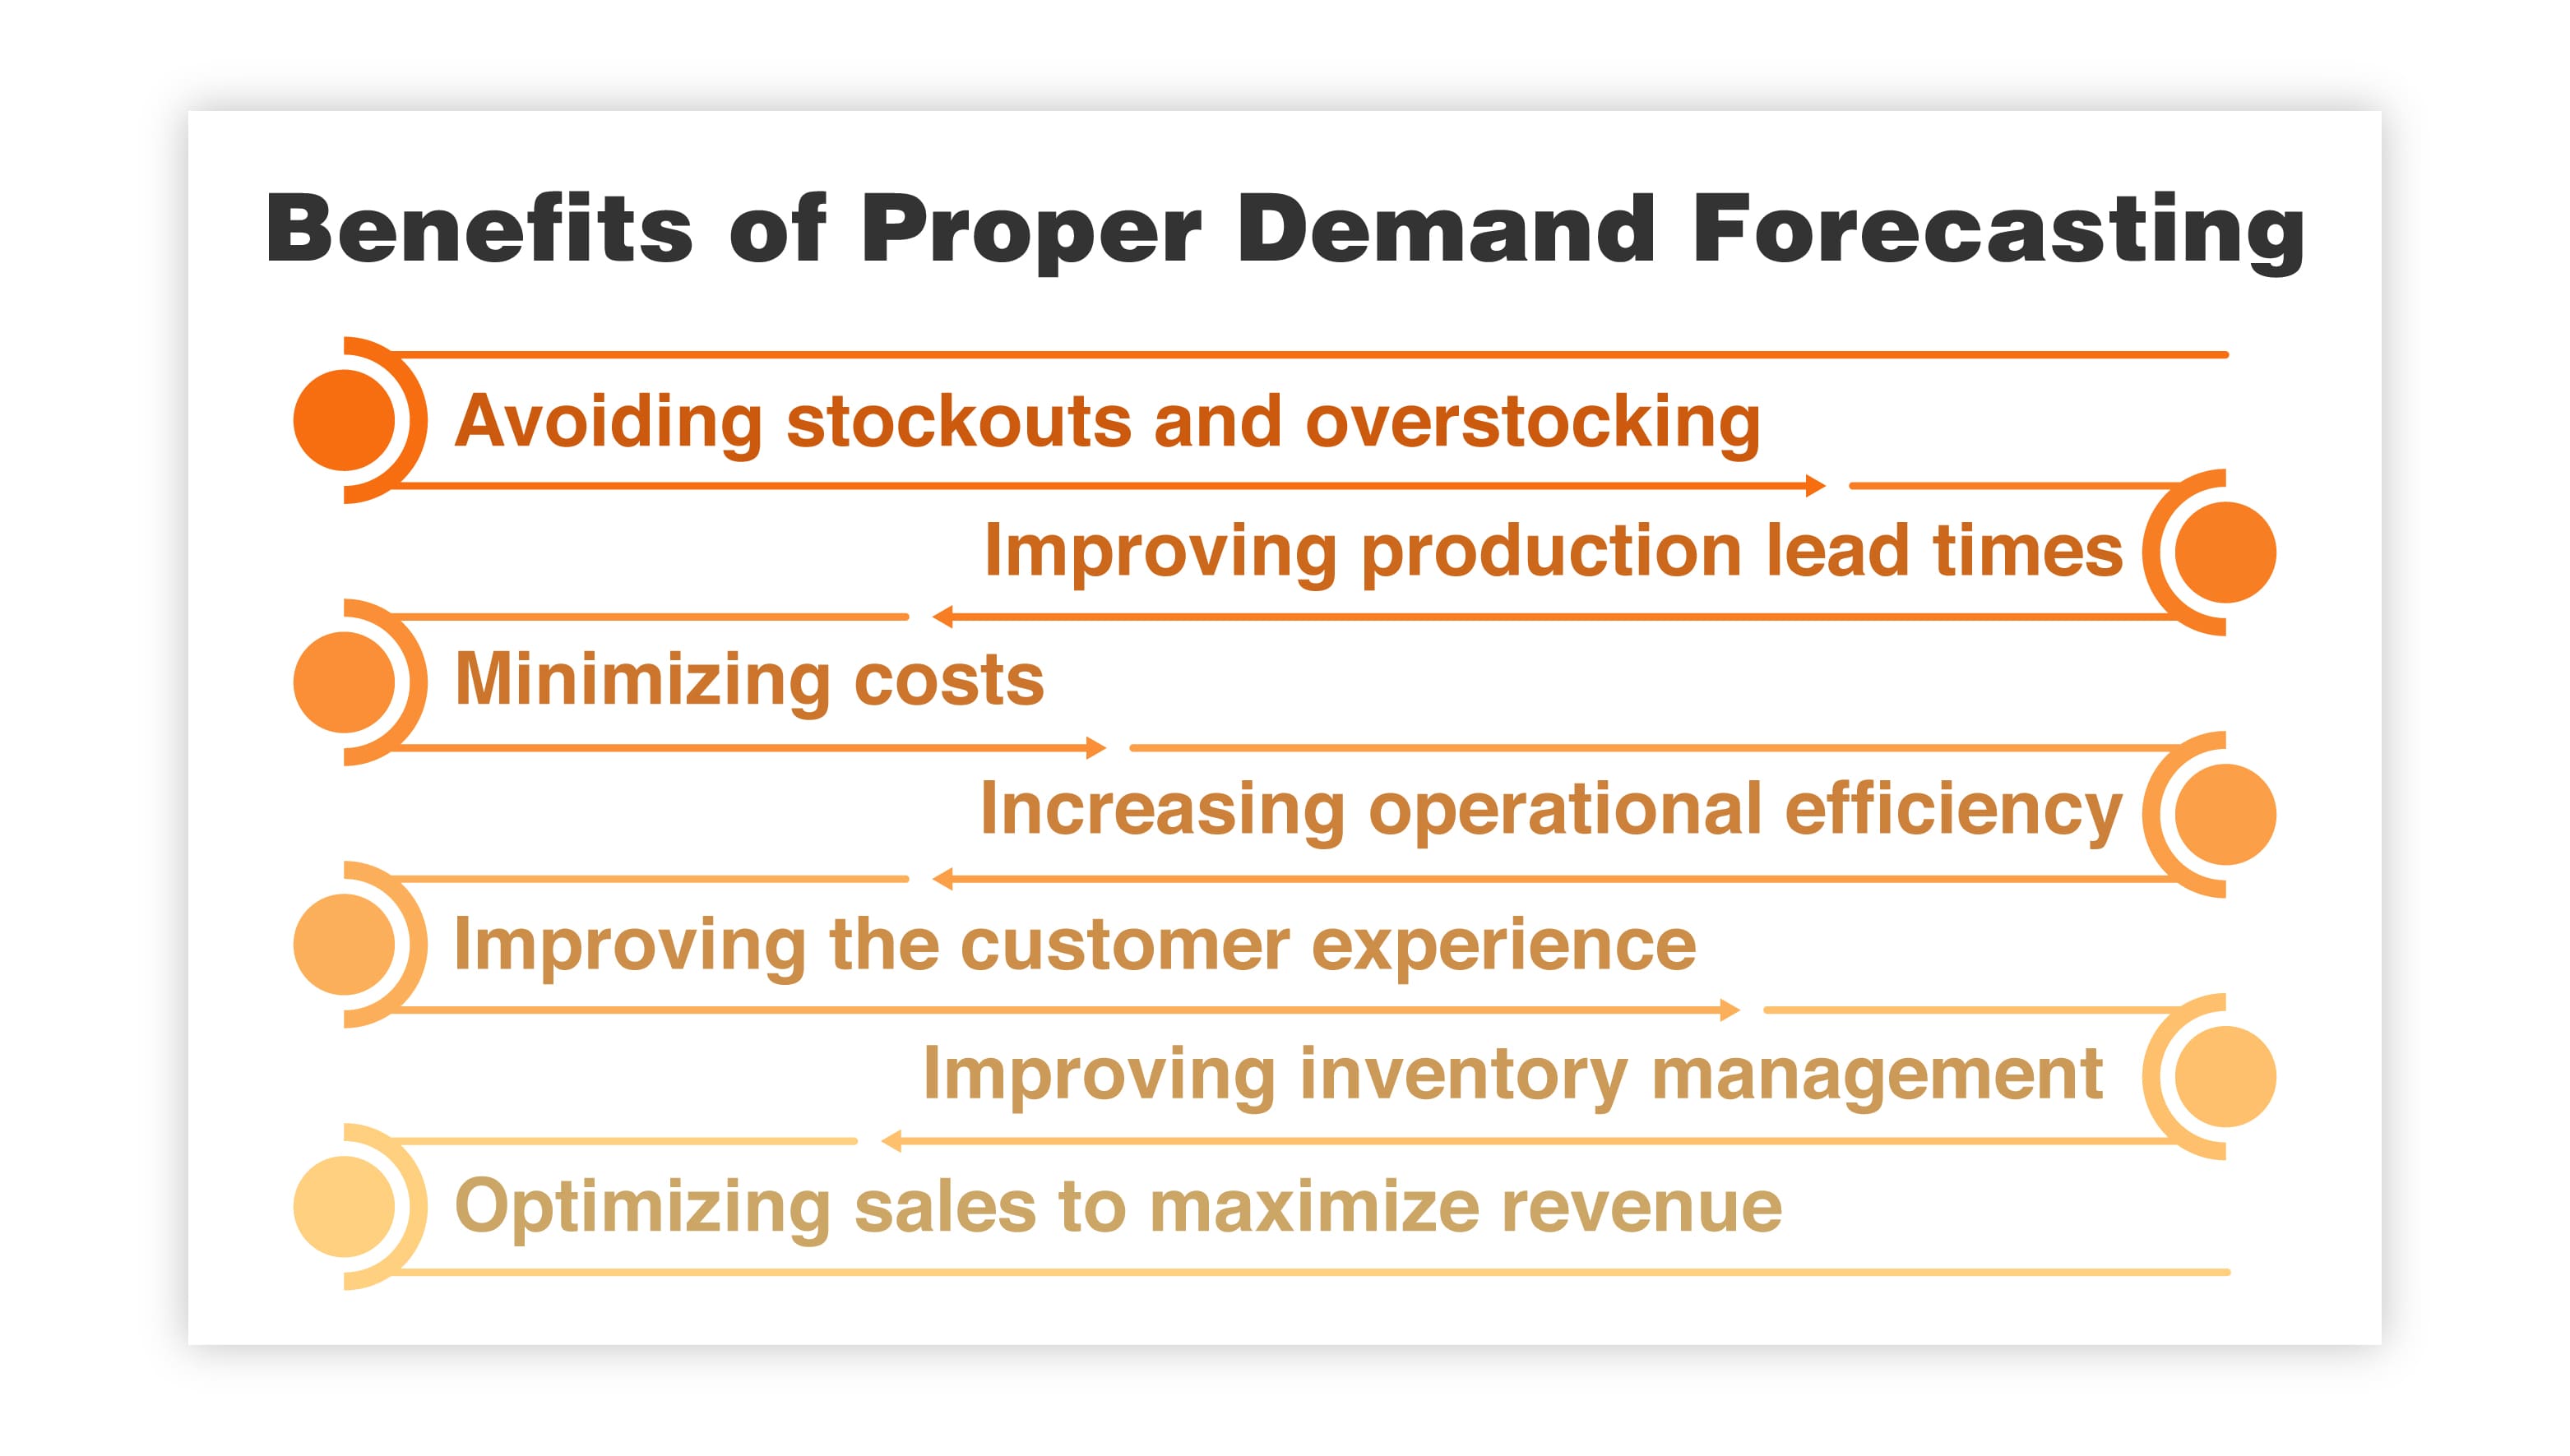 Benefits of Proper Demand Forecasting